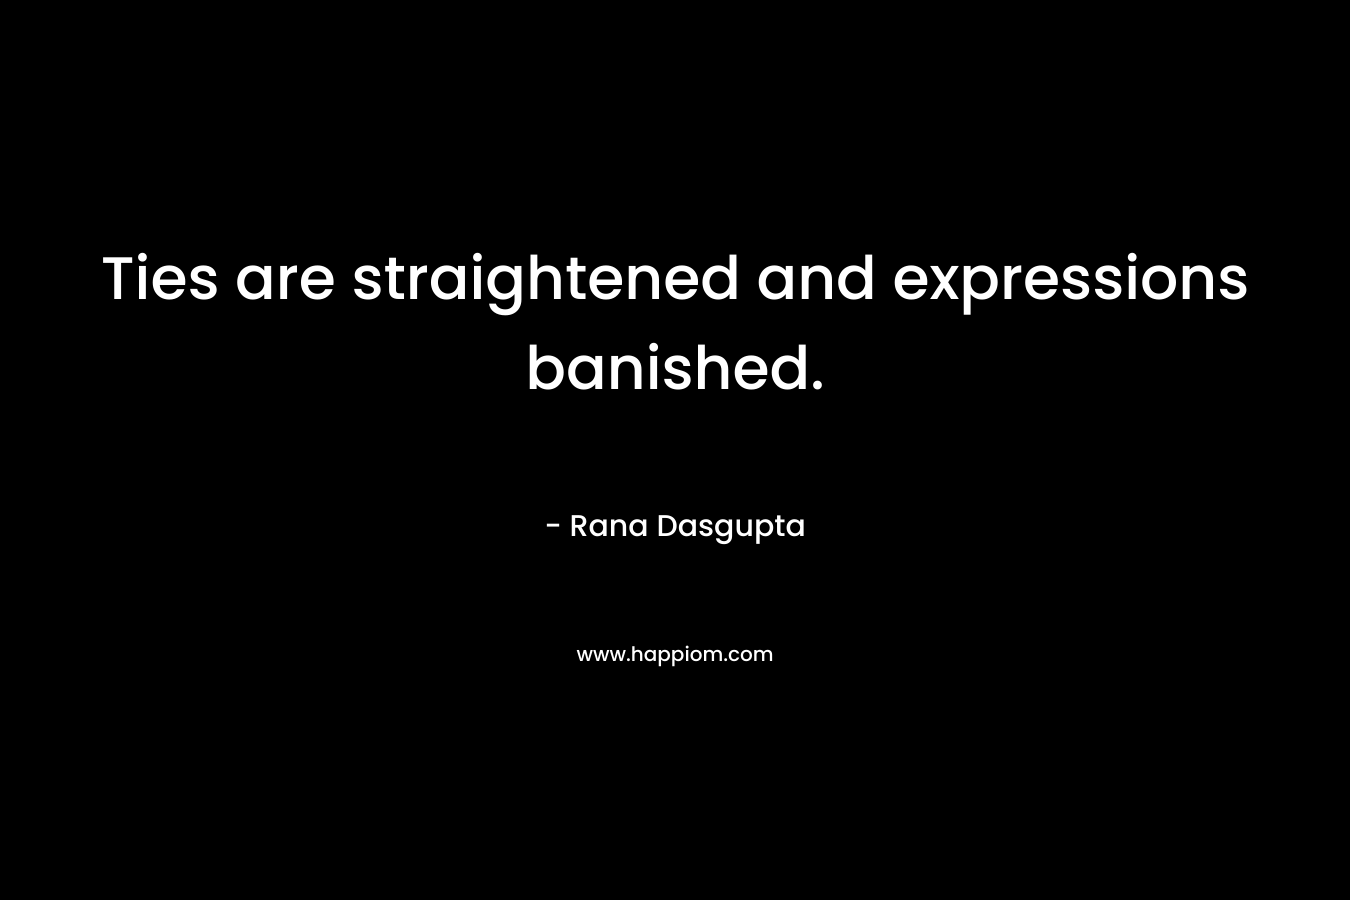 Ties are straightened and expressions banished. – Rana Dasgupta